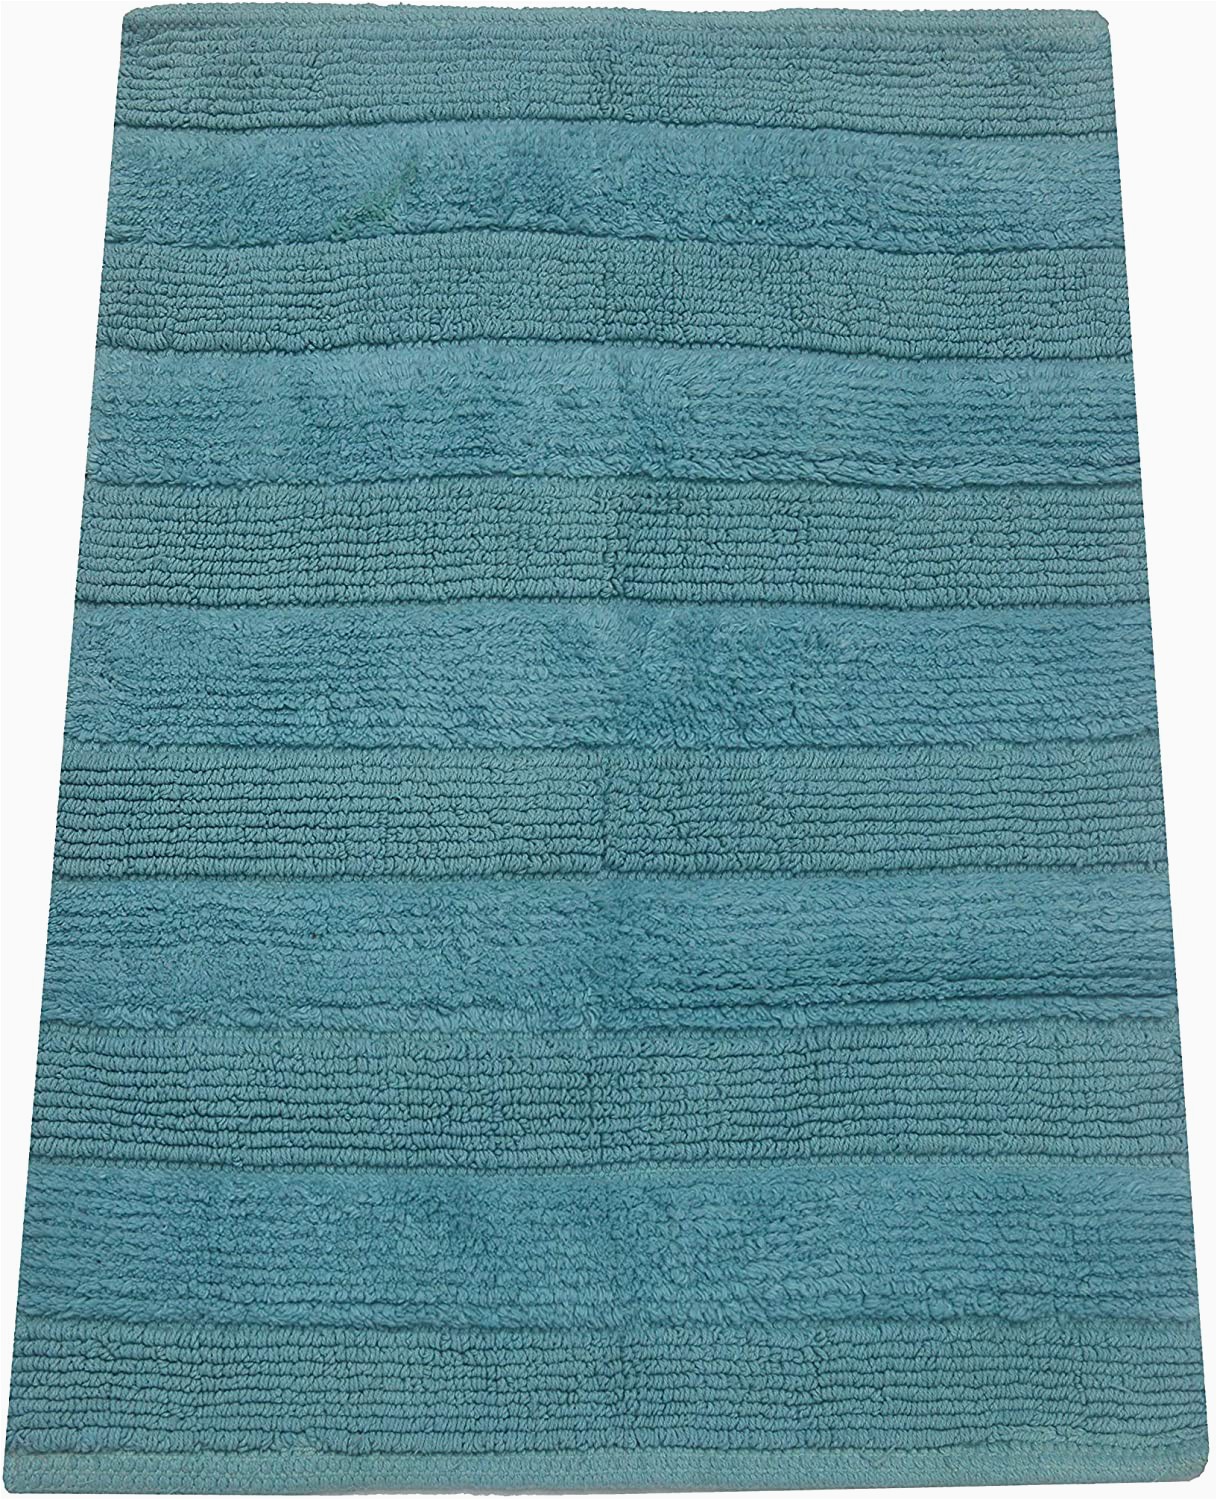 Spa Blue Bath Rugs Chardin Home – Thai Spa Cotton Hand Woven Bathroom Rug Size 20”x30” Light Blue with Latex Spray Back